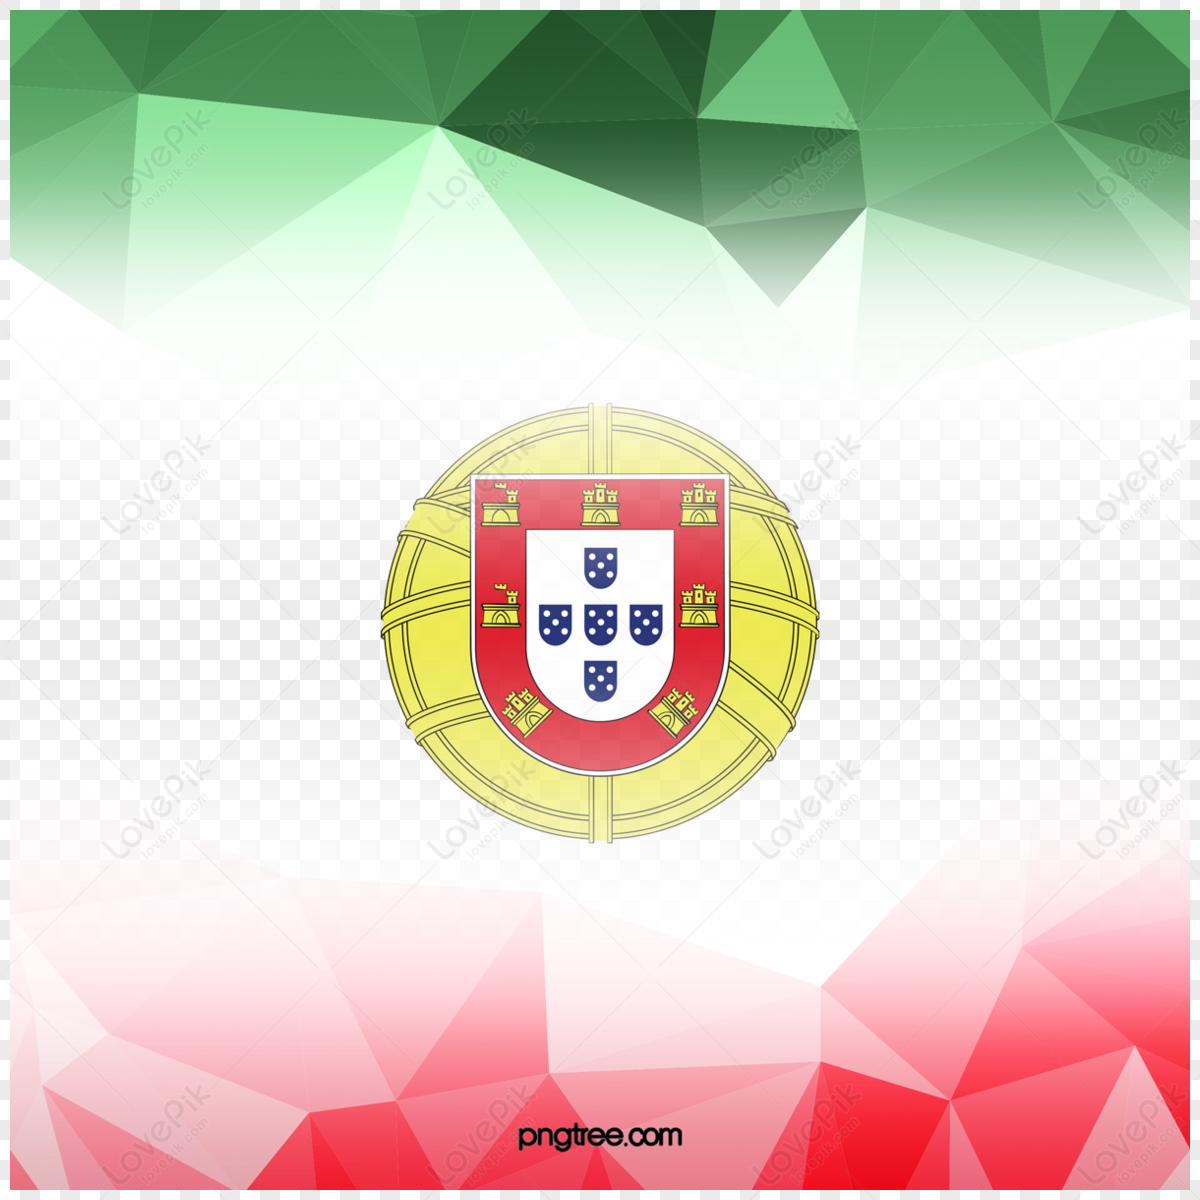 Águas de Portugal Logo Download png